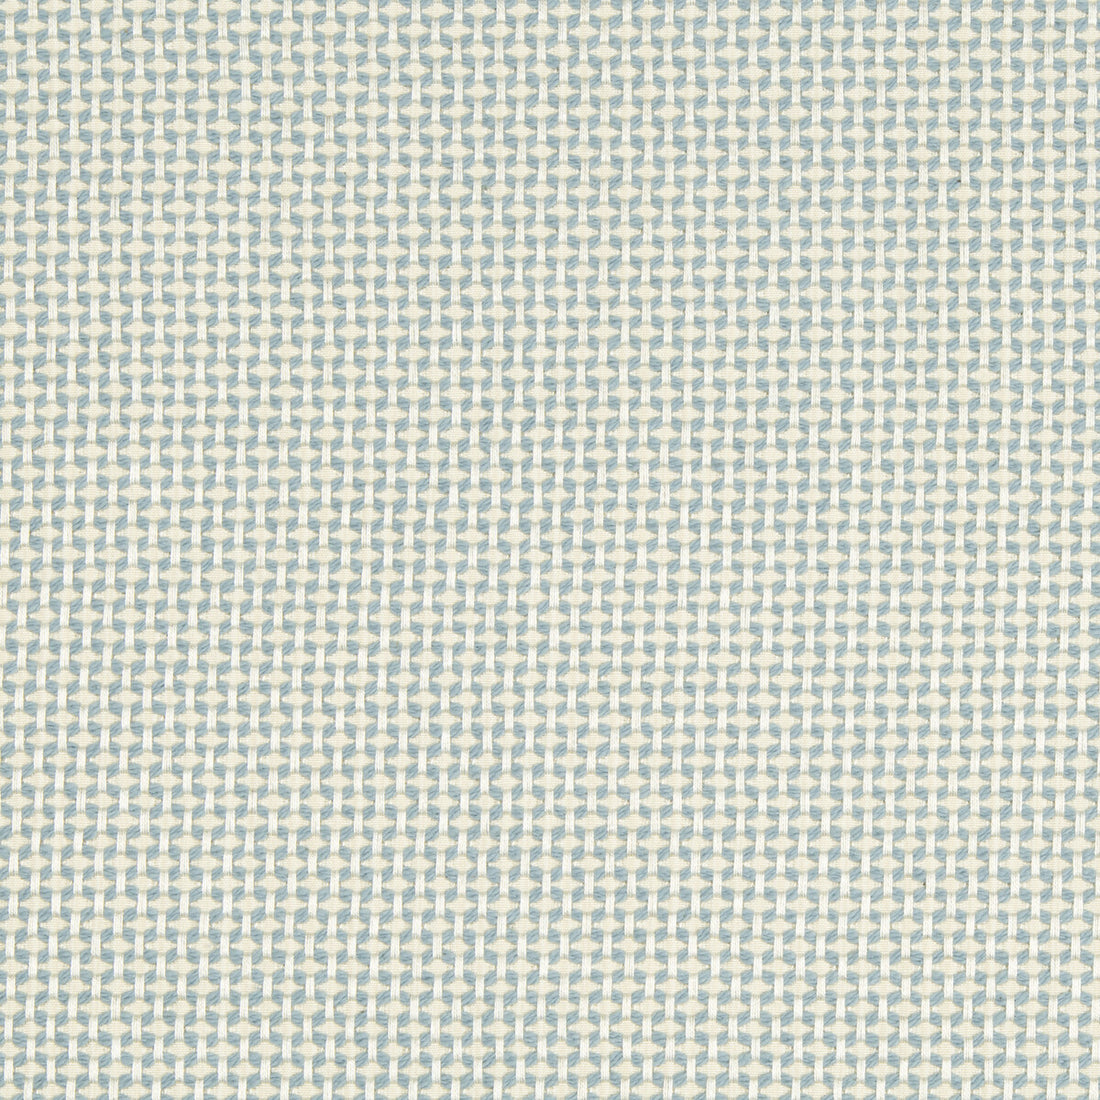 Kravet Design fabric in 34716-516 color - pattern 34716.516.0 - by Kravet Design in the Gis collection